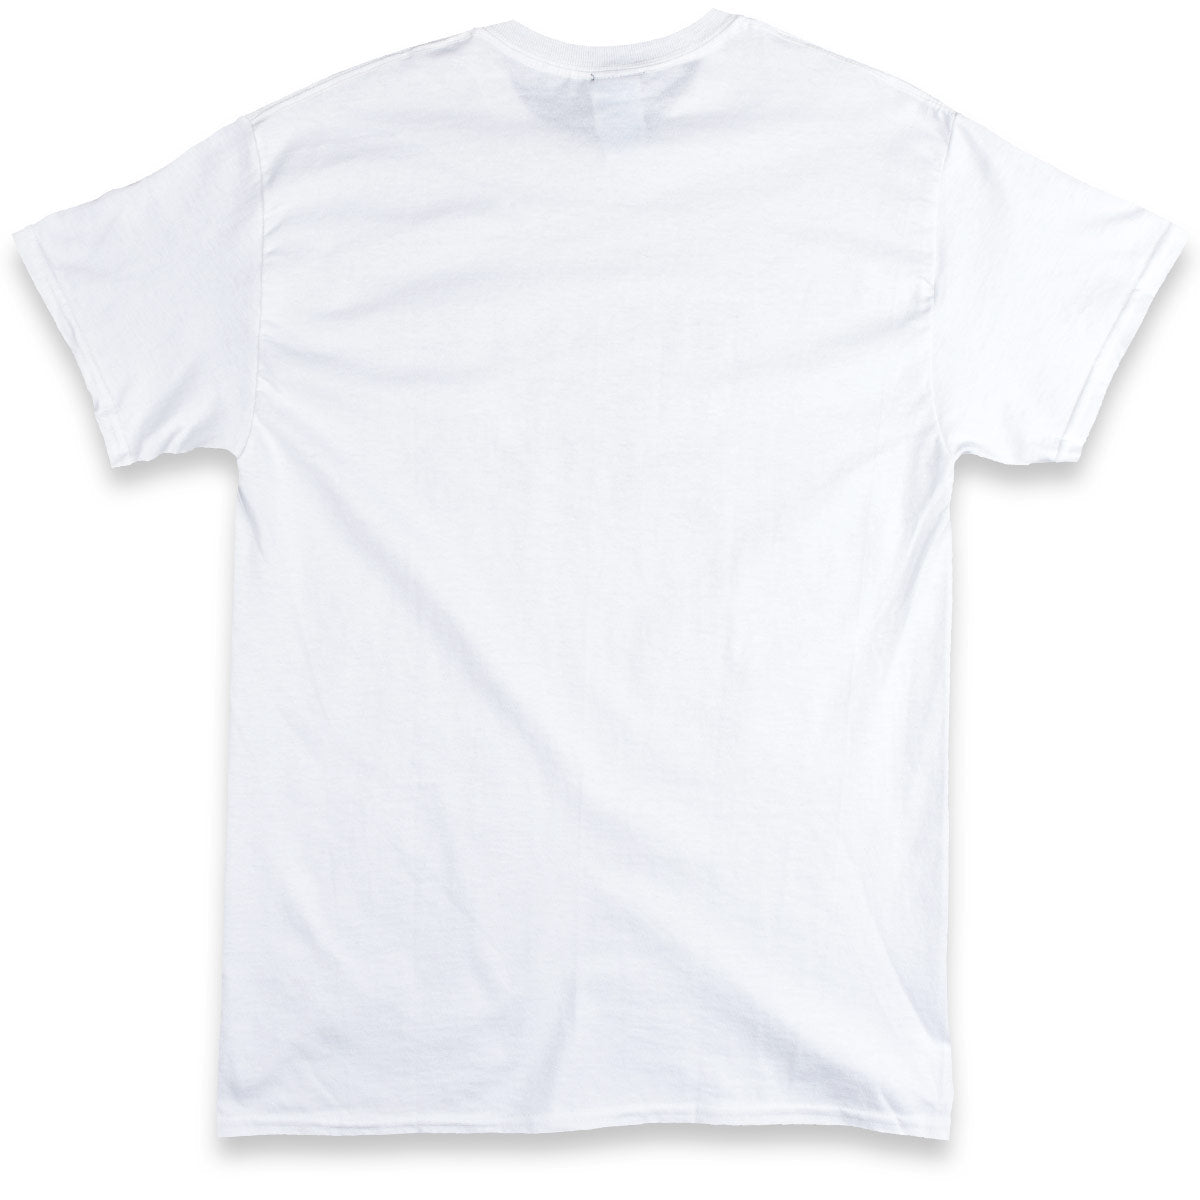 Thrasher Skate And Destroy T-Shirt - White image 2